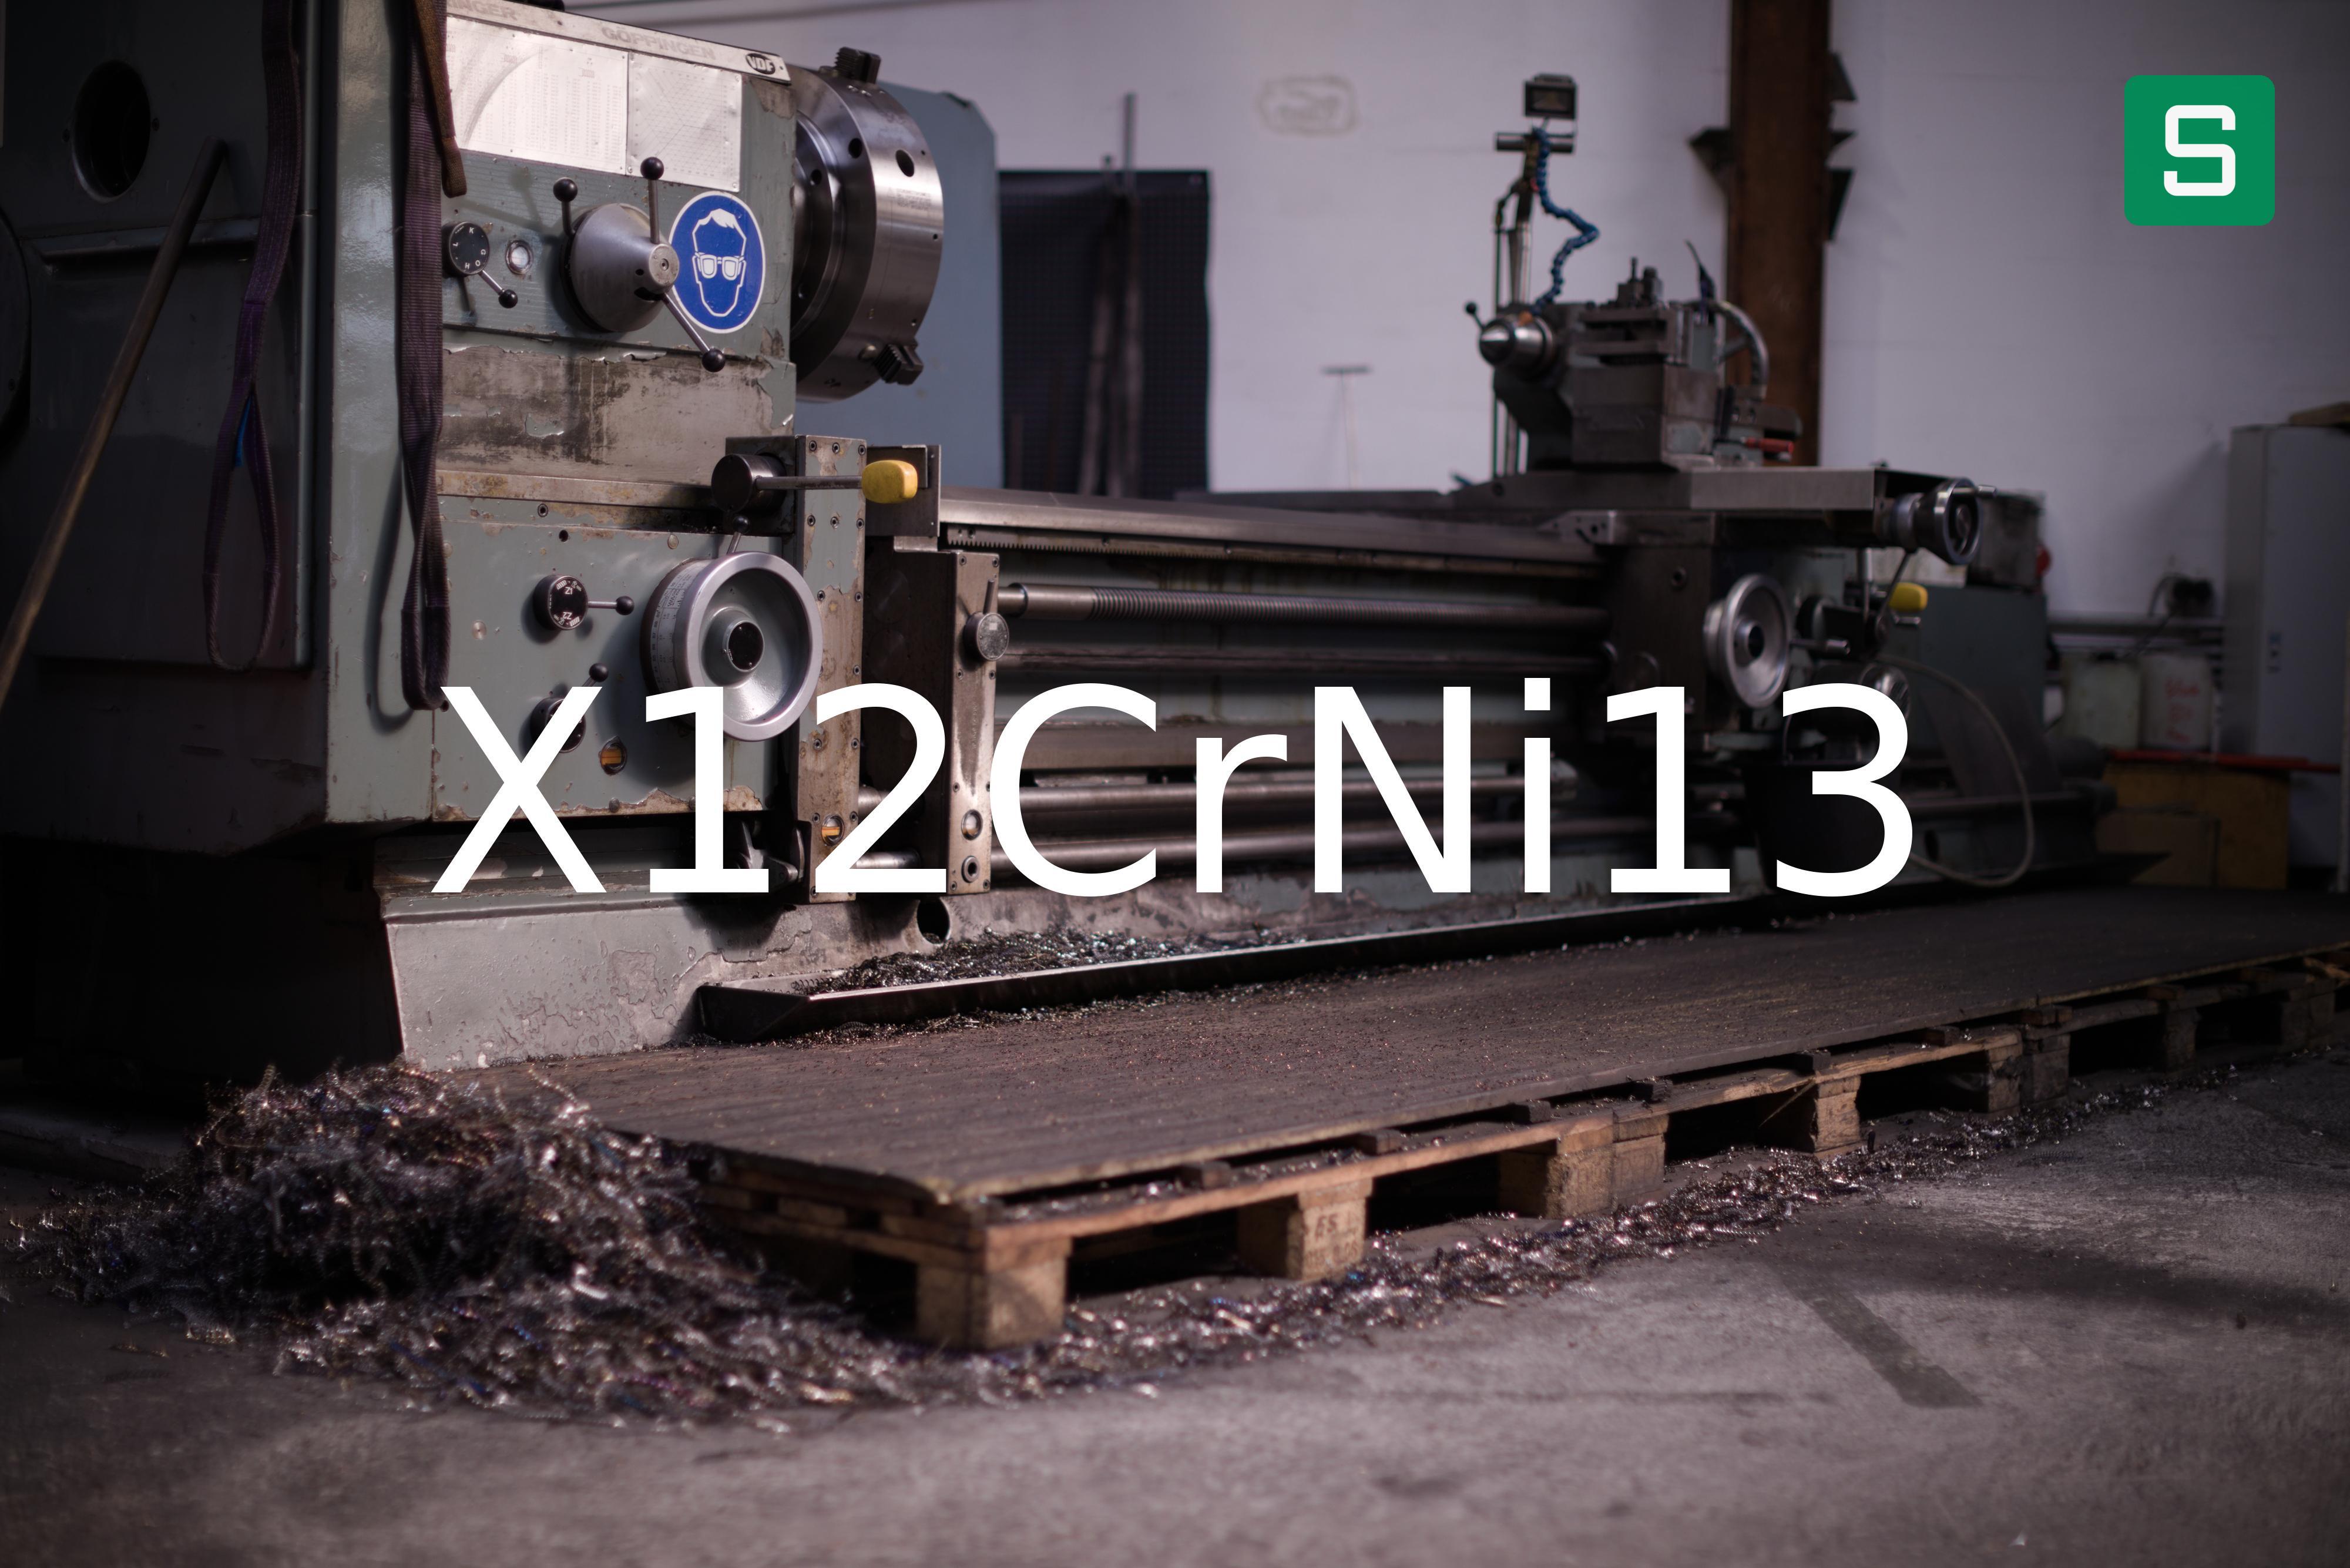 Steel Material: X12CrNi13